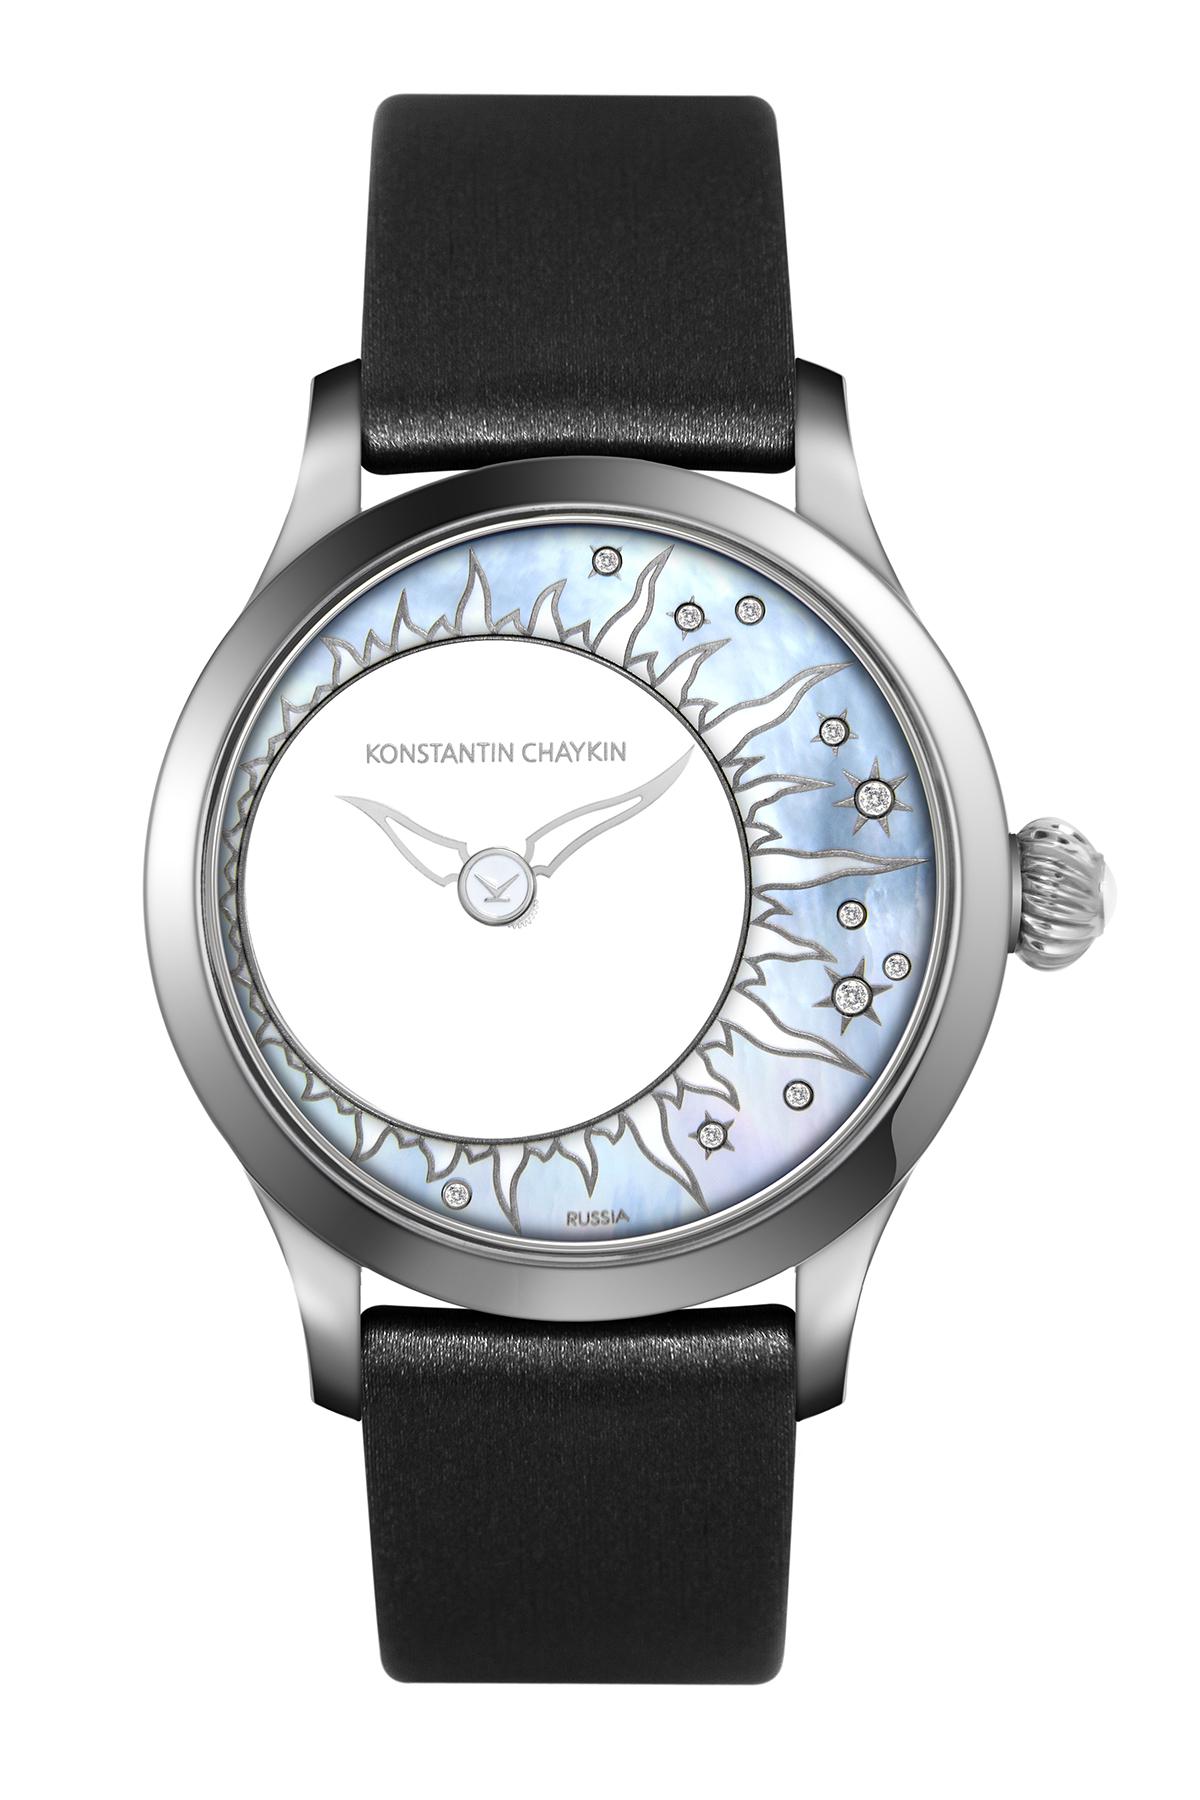 Часы Levitas Mother of Pearl, Konstantin Chaykin, цена по запросу (Konstantin Chaykin)